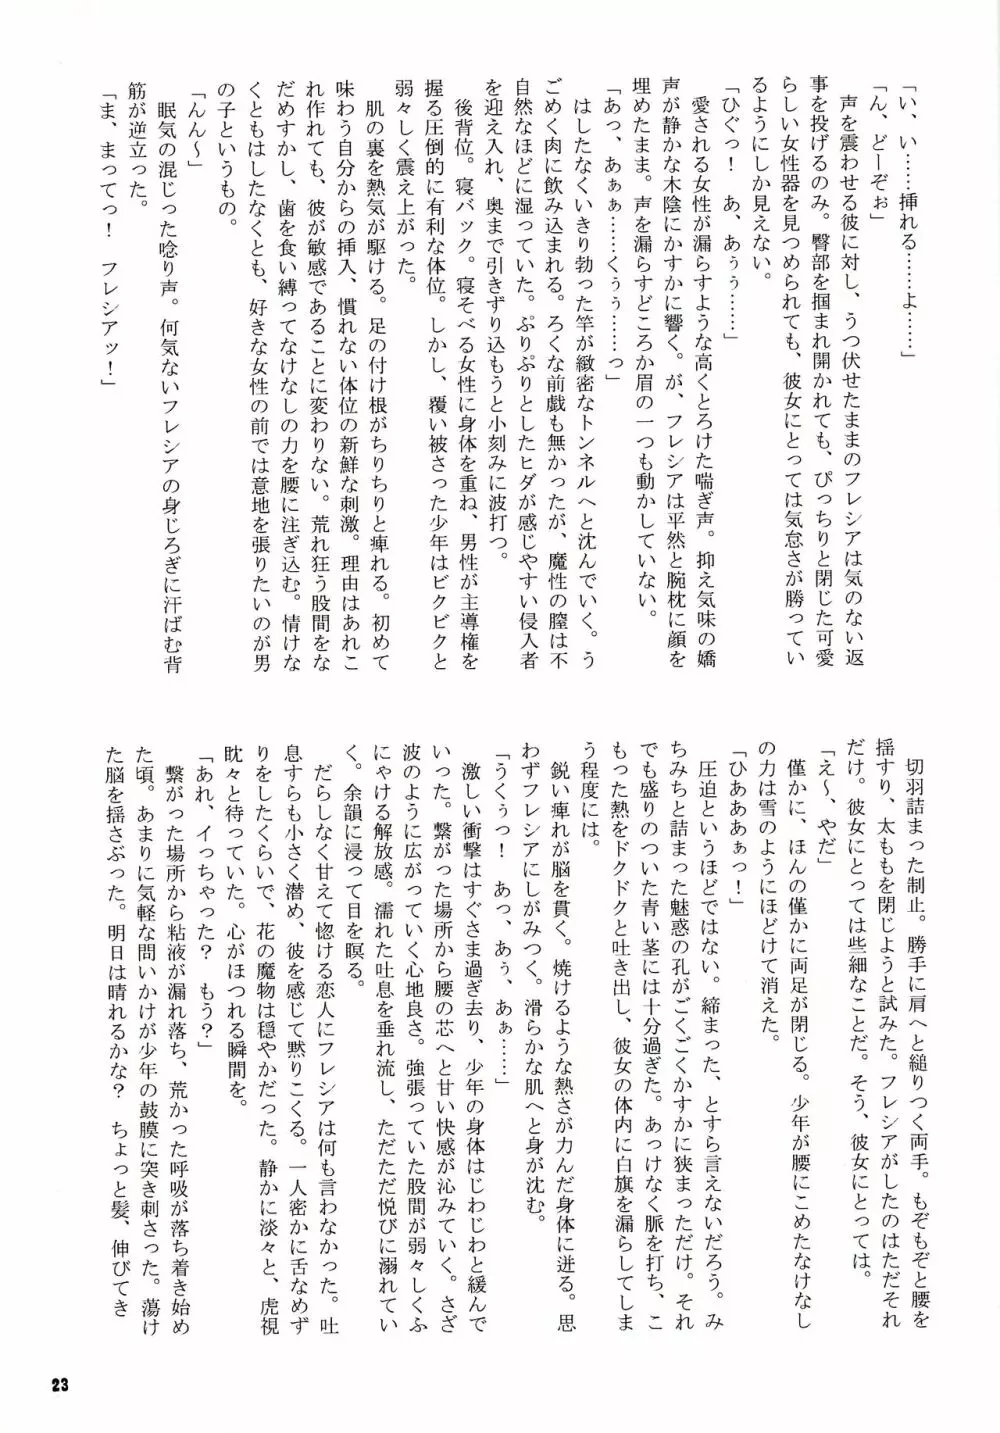 蟲惑楽園調査記録 side:B - page23